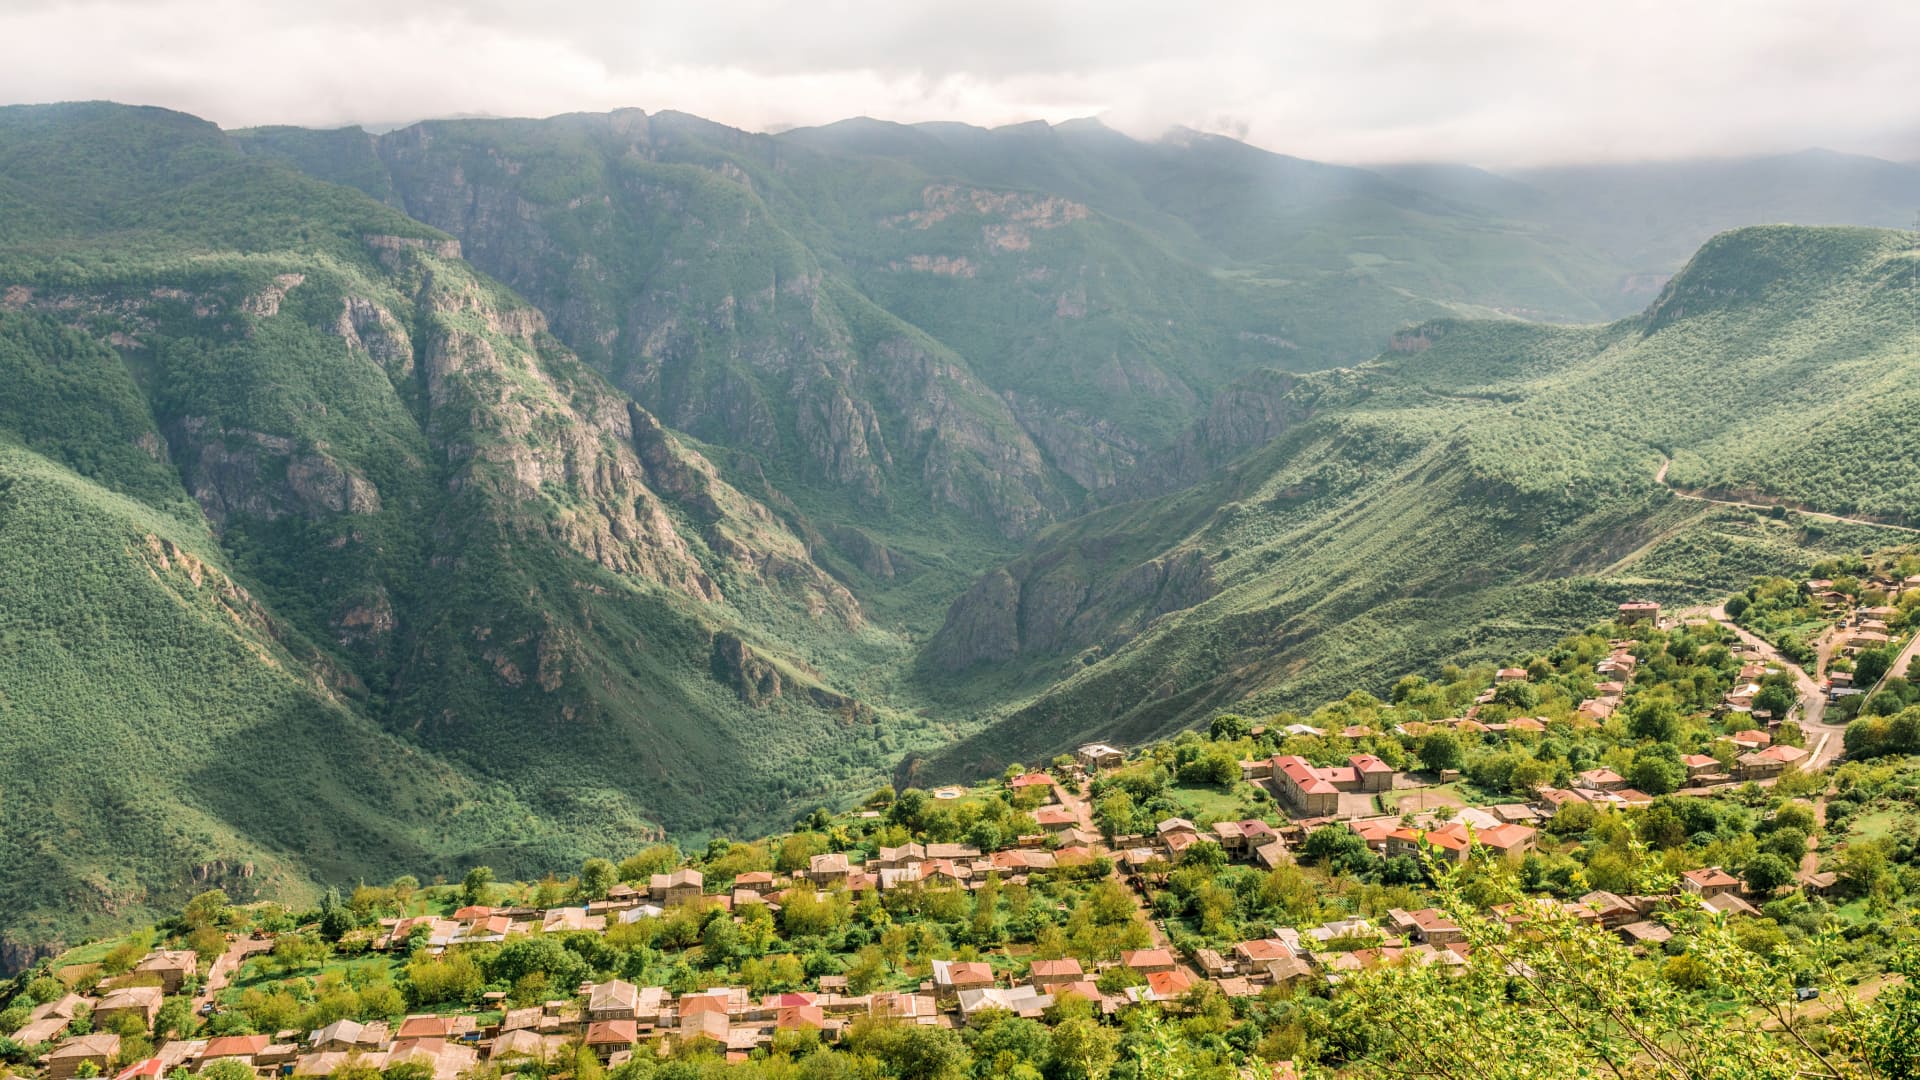 Природа Армении